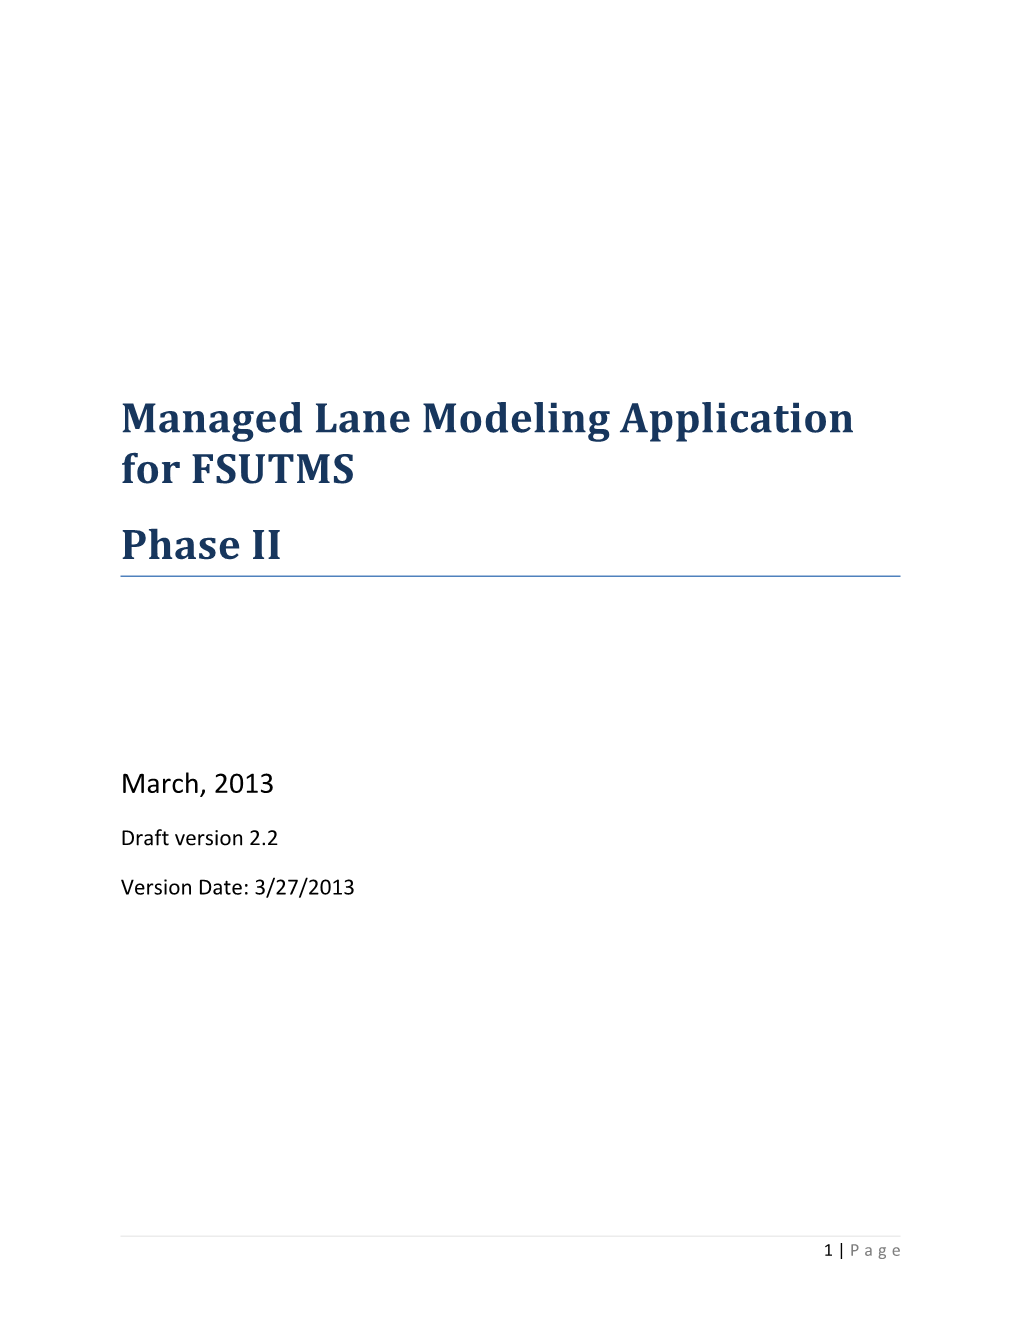 Managed Lane Modeling Application for FSUTMS